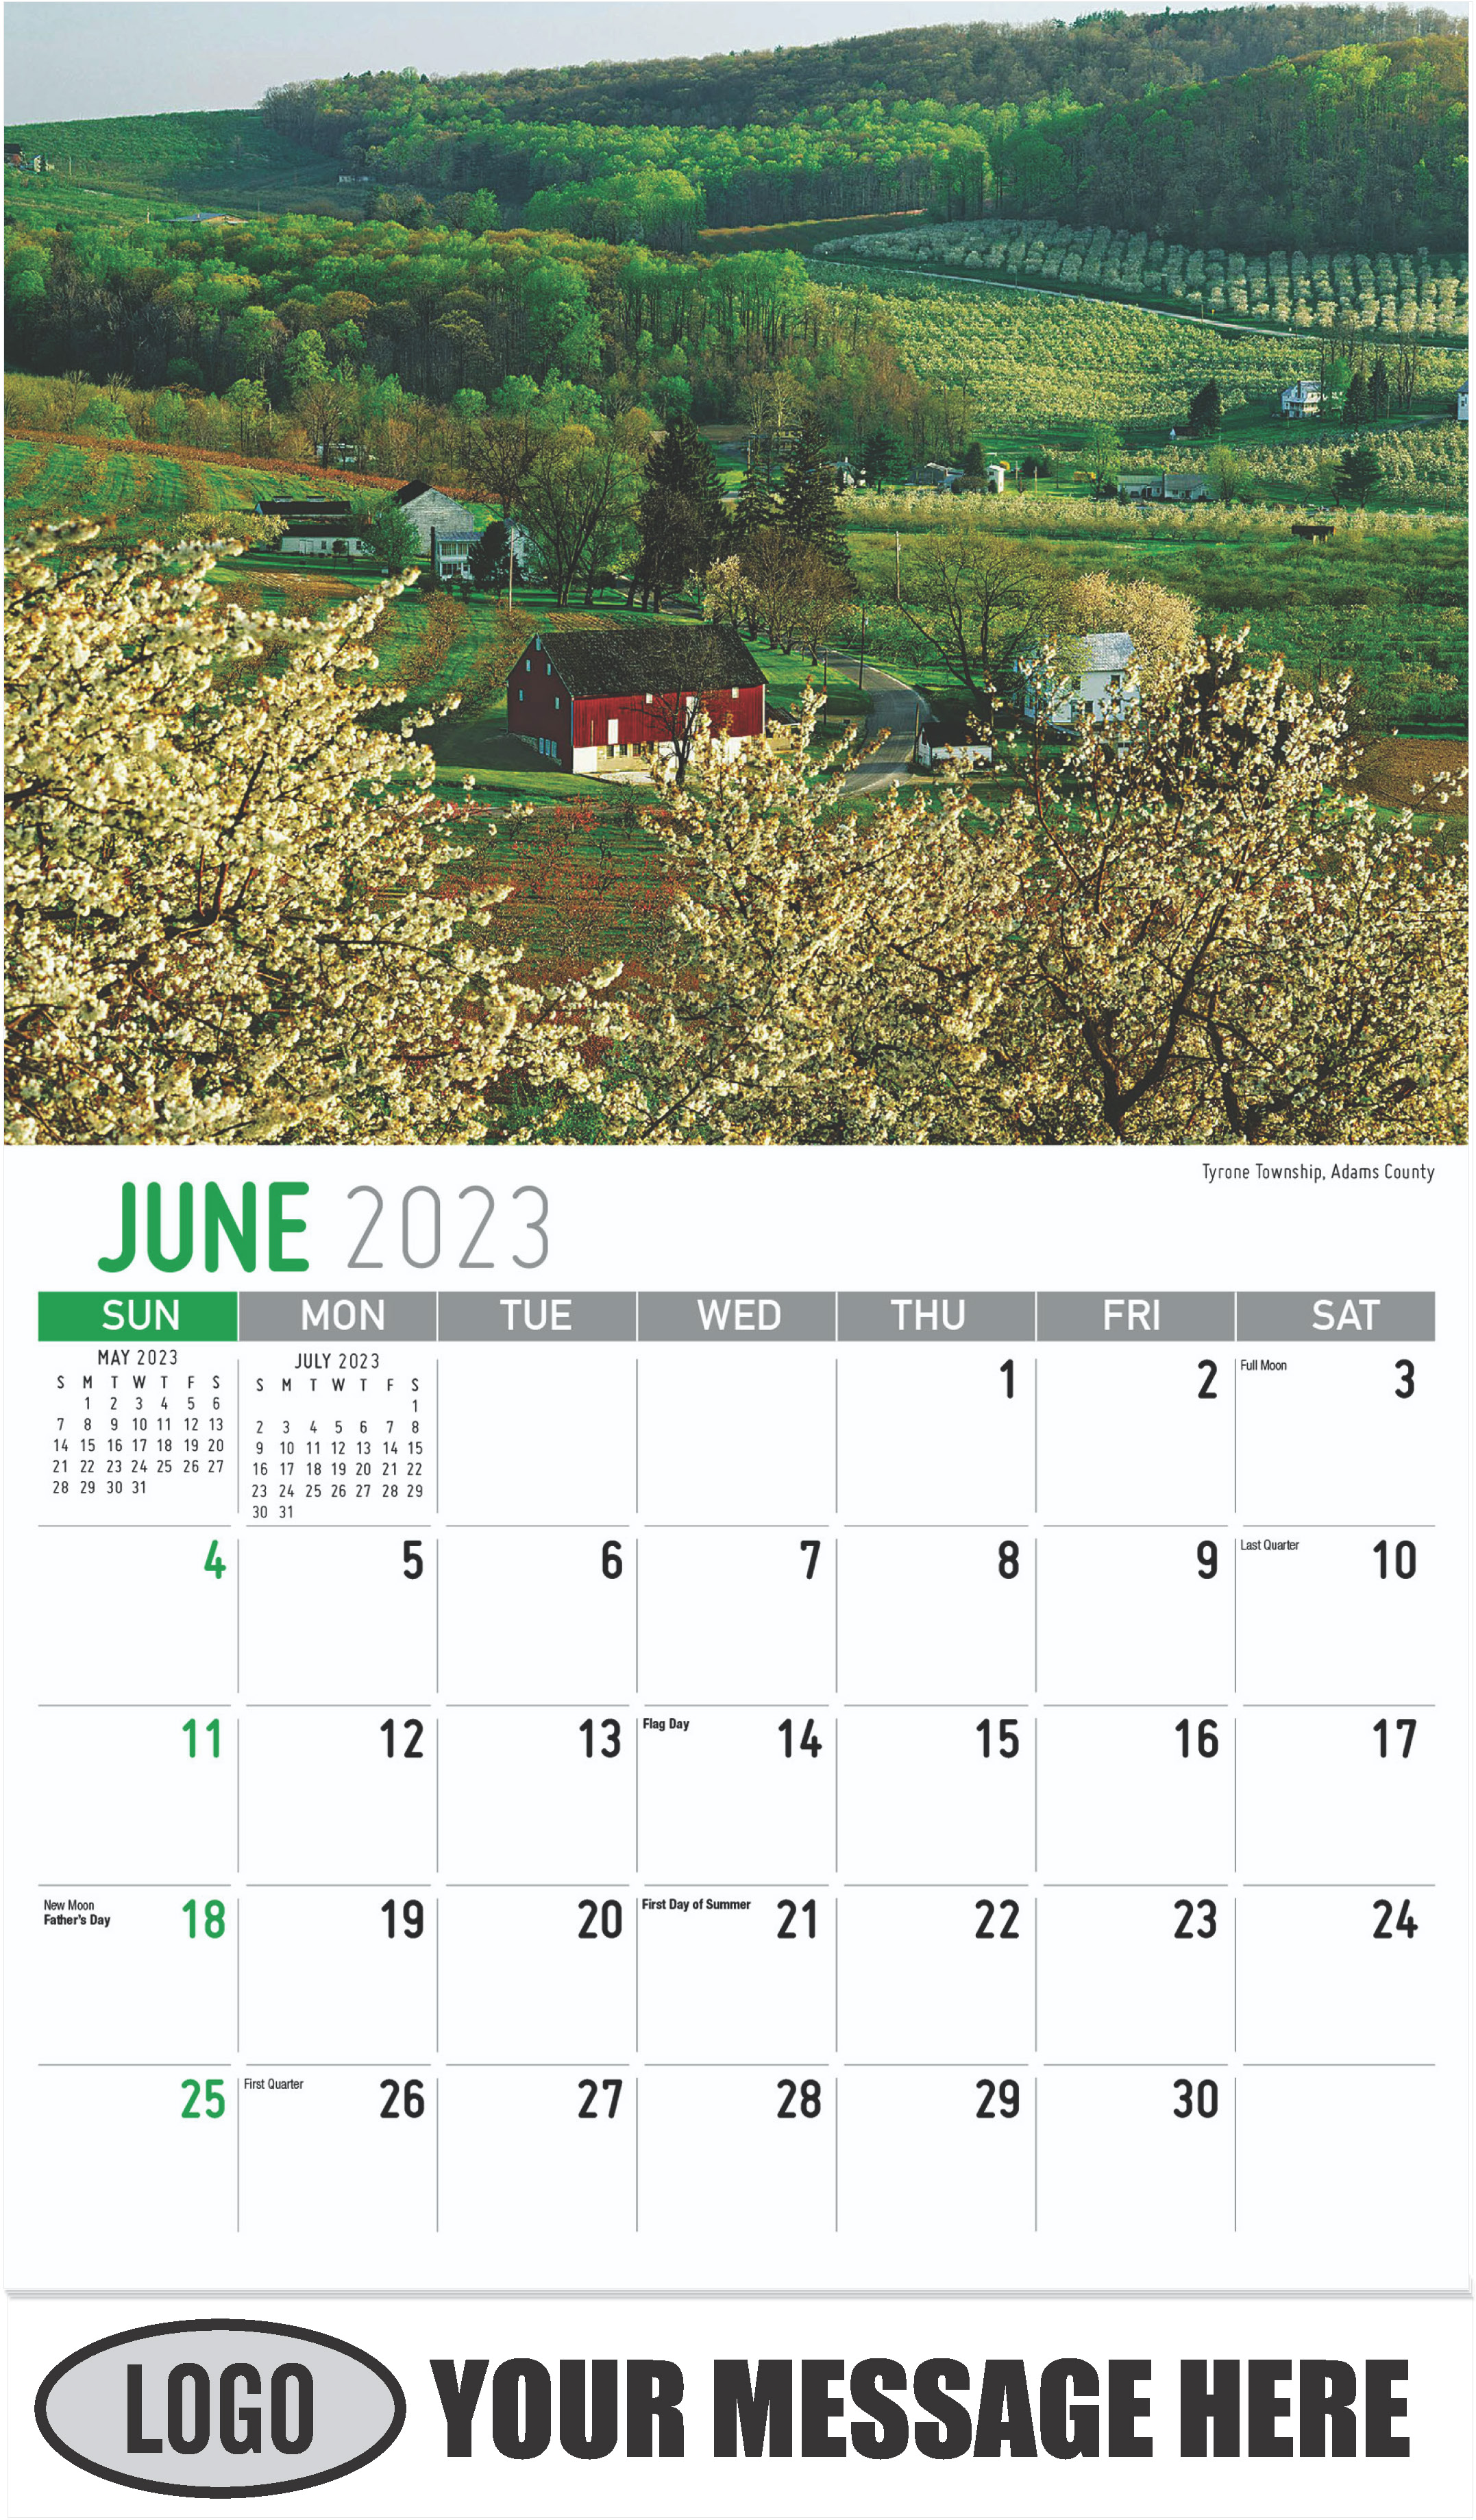 Tyrone Township, Adams County - June - Scenes of Pennsylvania 2023 Promotional Calendar